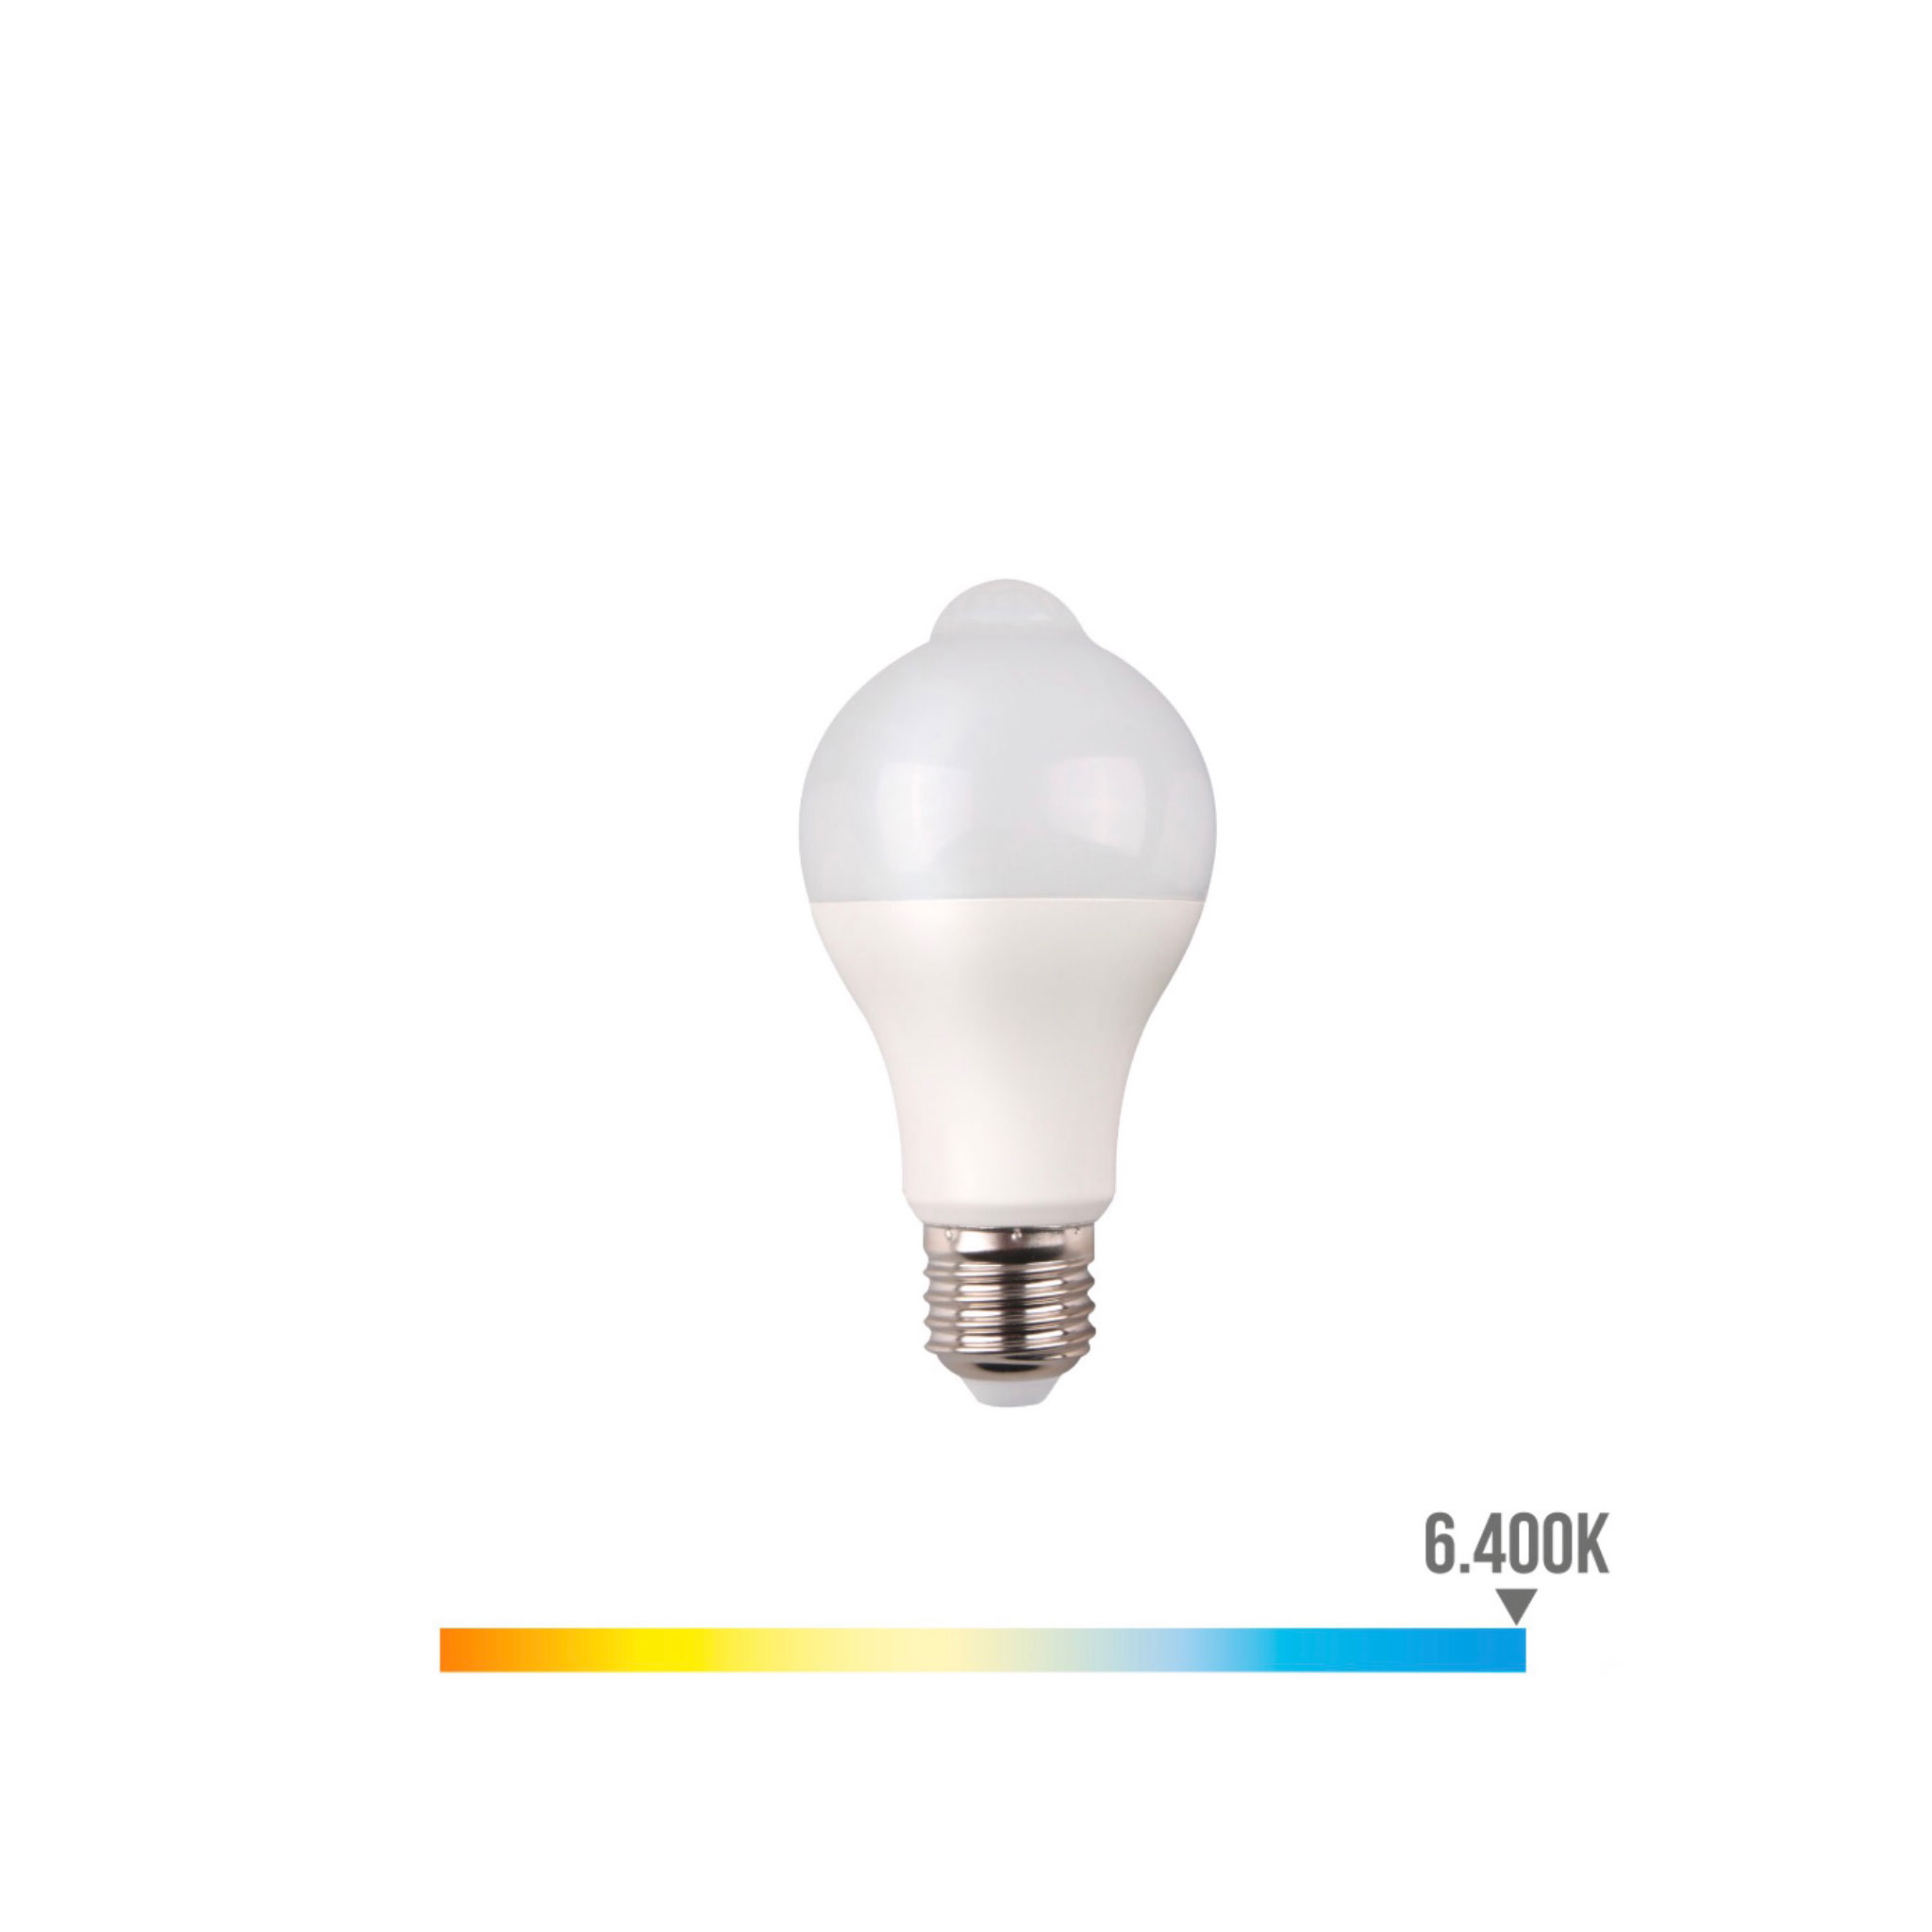 LAMPADA STANDARD LED COM SENSOR DE PRESENÇA / CREPUSCULAR E27 12W 1055 Lm 6400K LUZ FRIA 